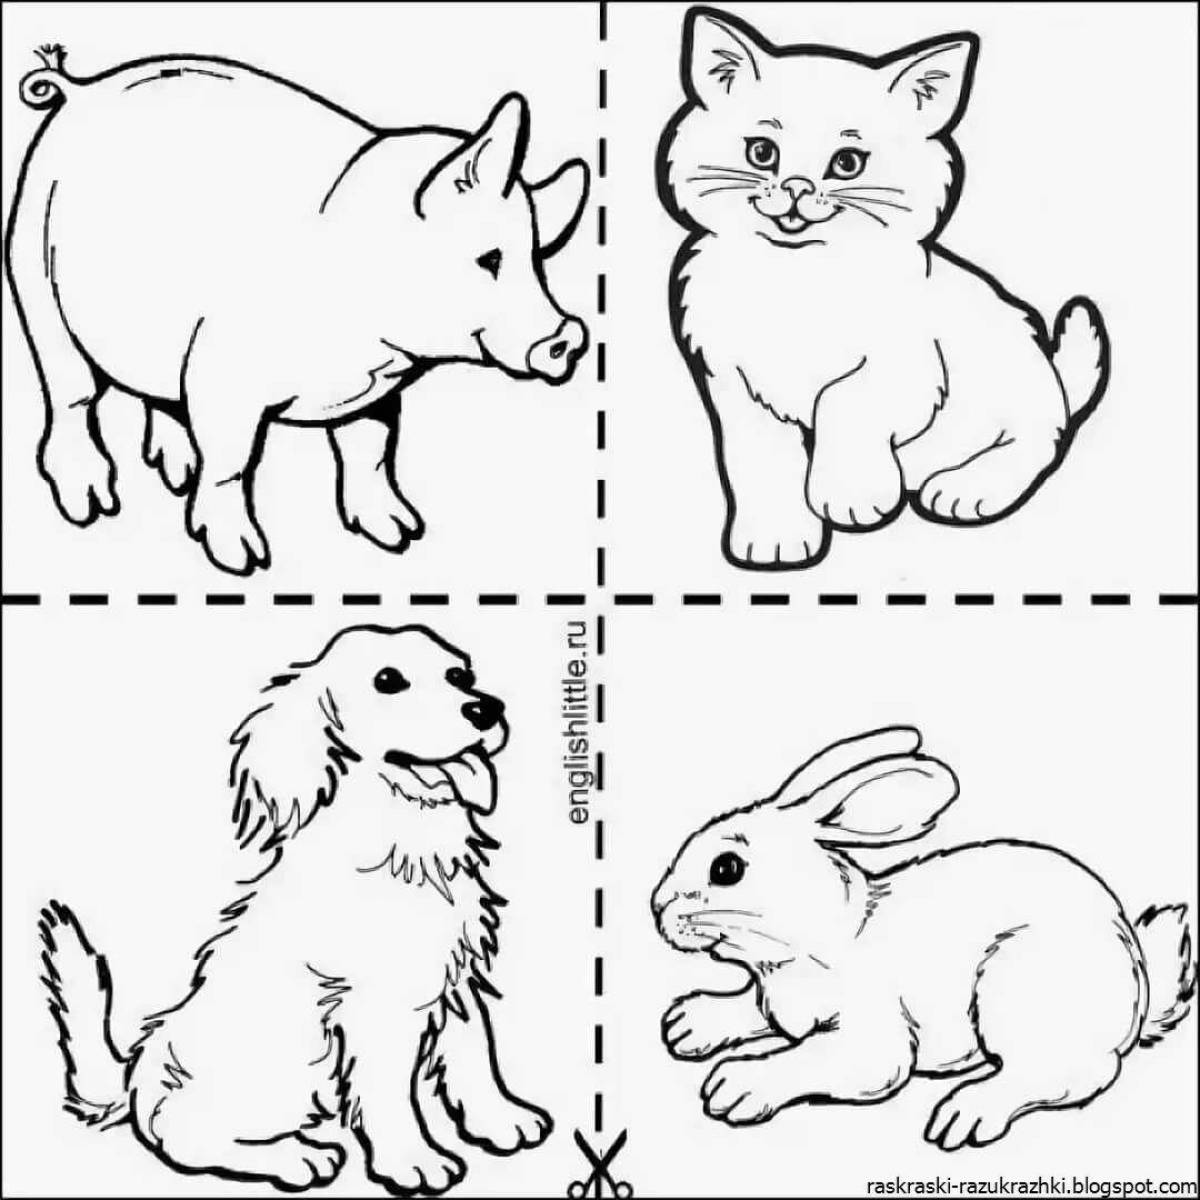 Adorable preschool pet coloring book